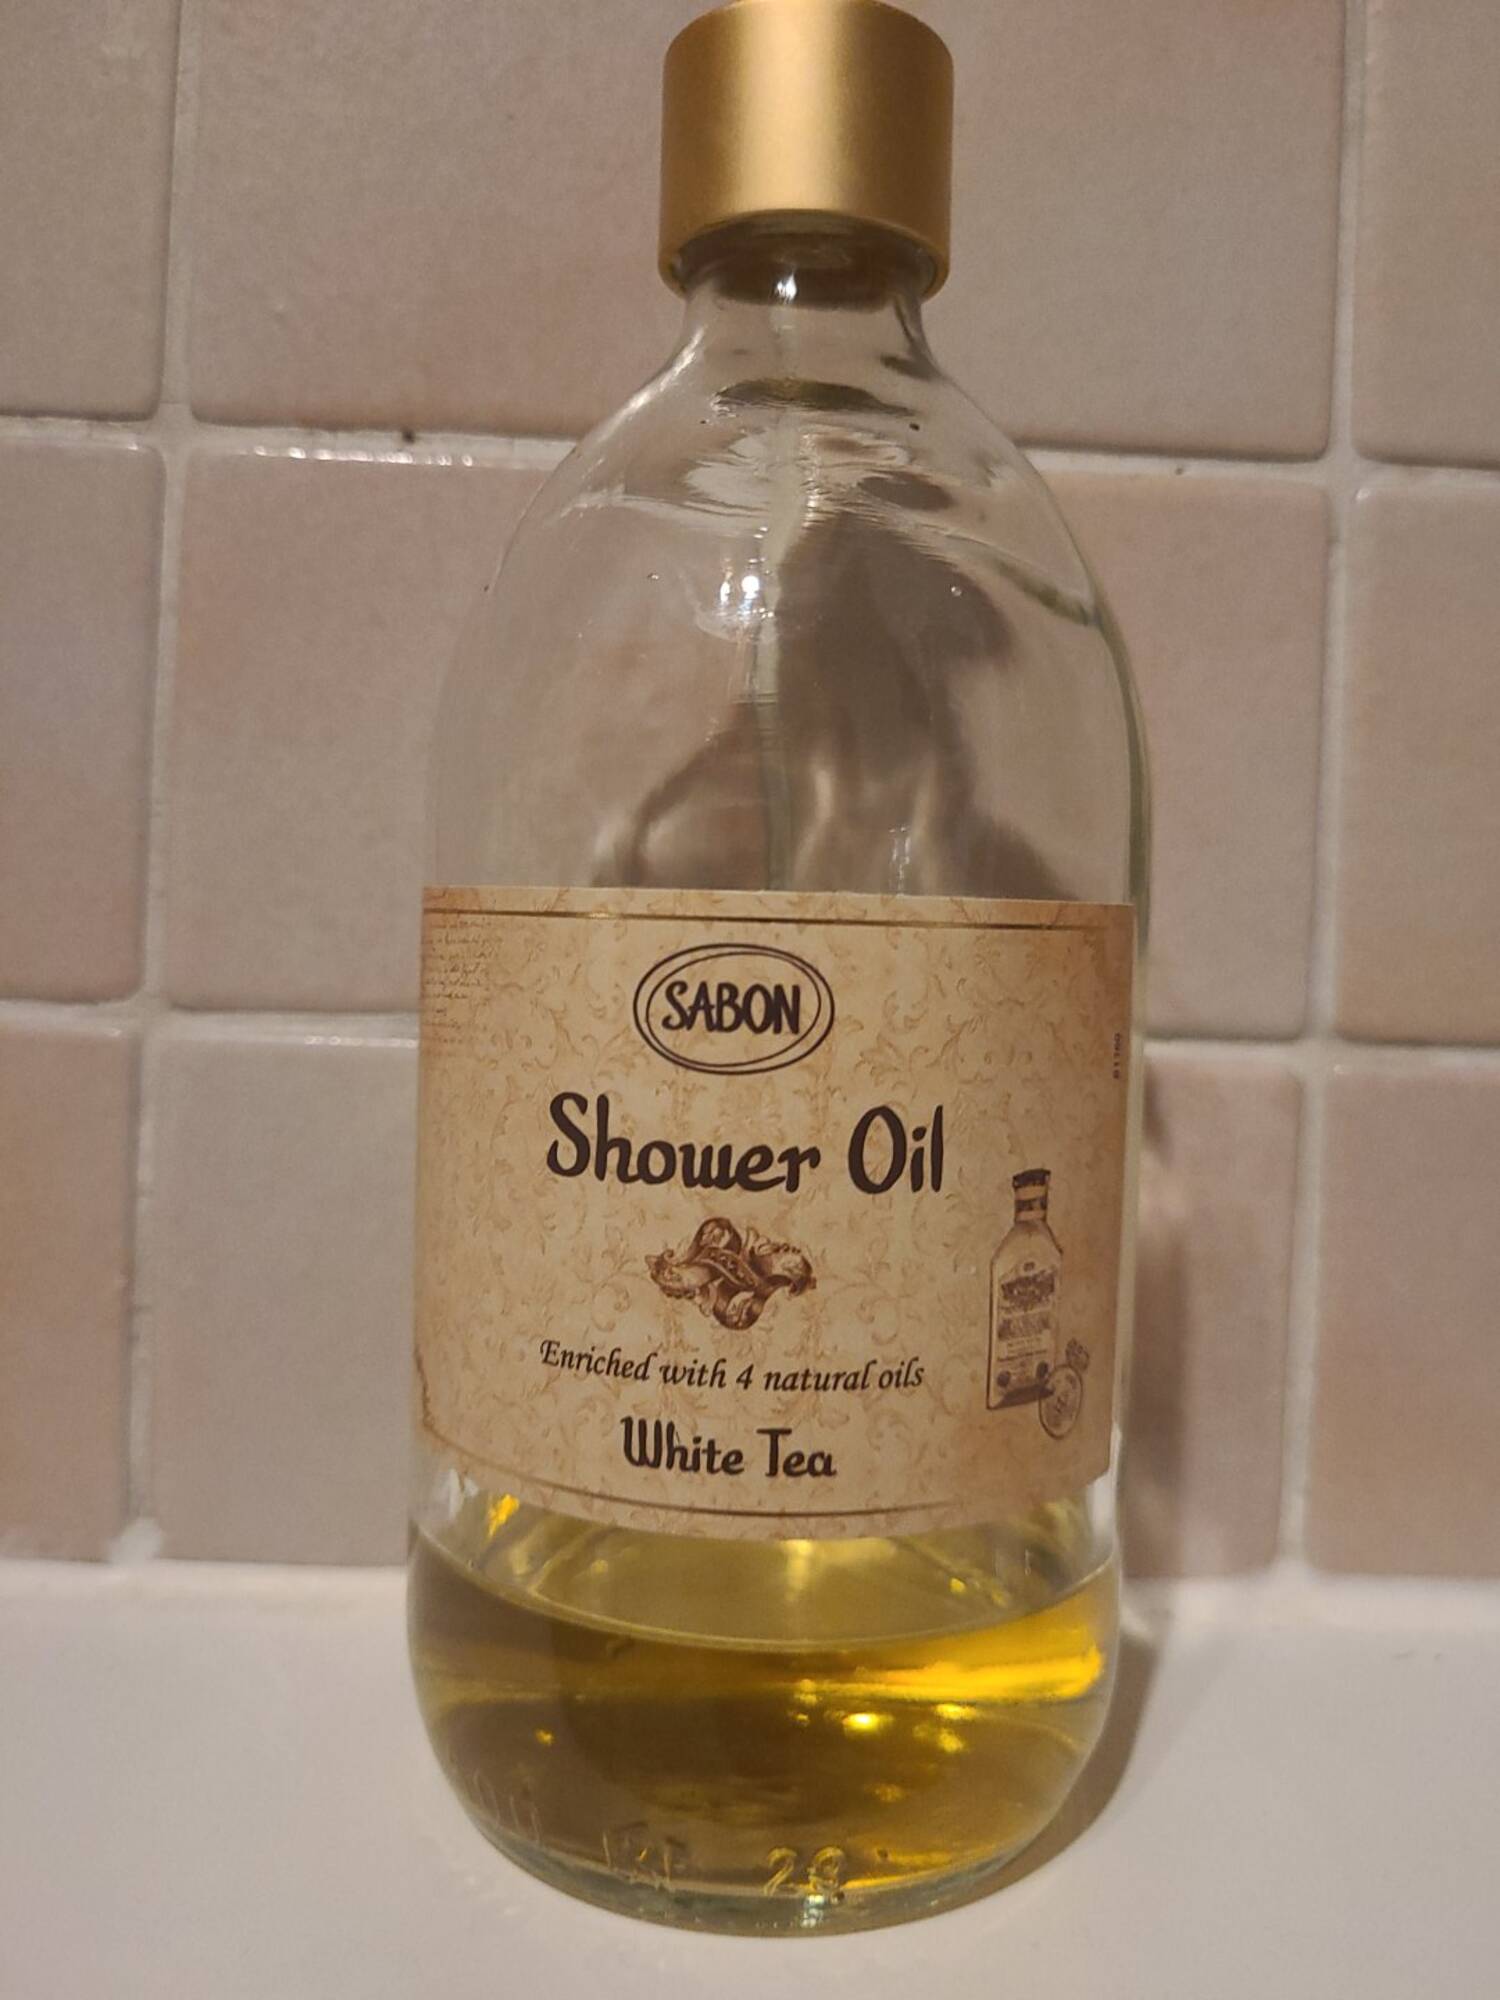 SABON - White tea - Shower oil 